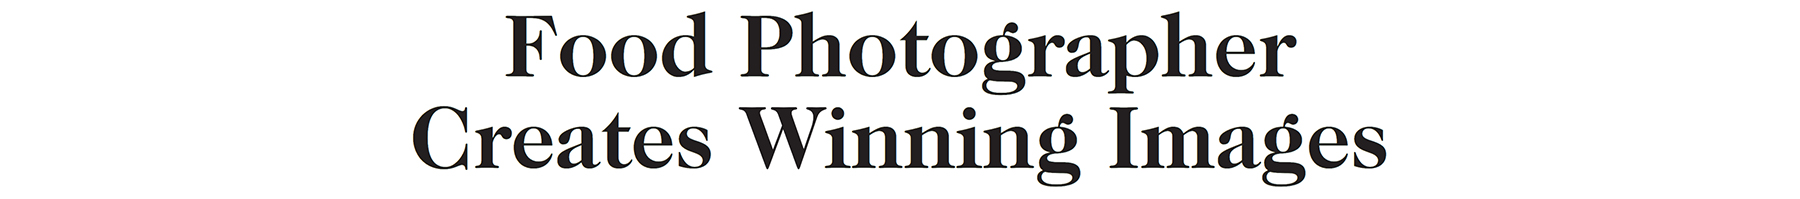 Hospitality Business Magazine Headline・Food Photographer Manja Wachsmuth Creates Winning Images